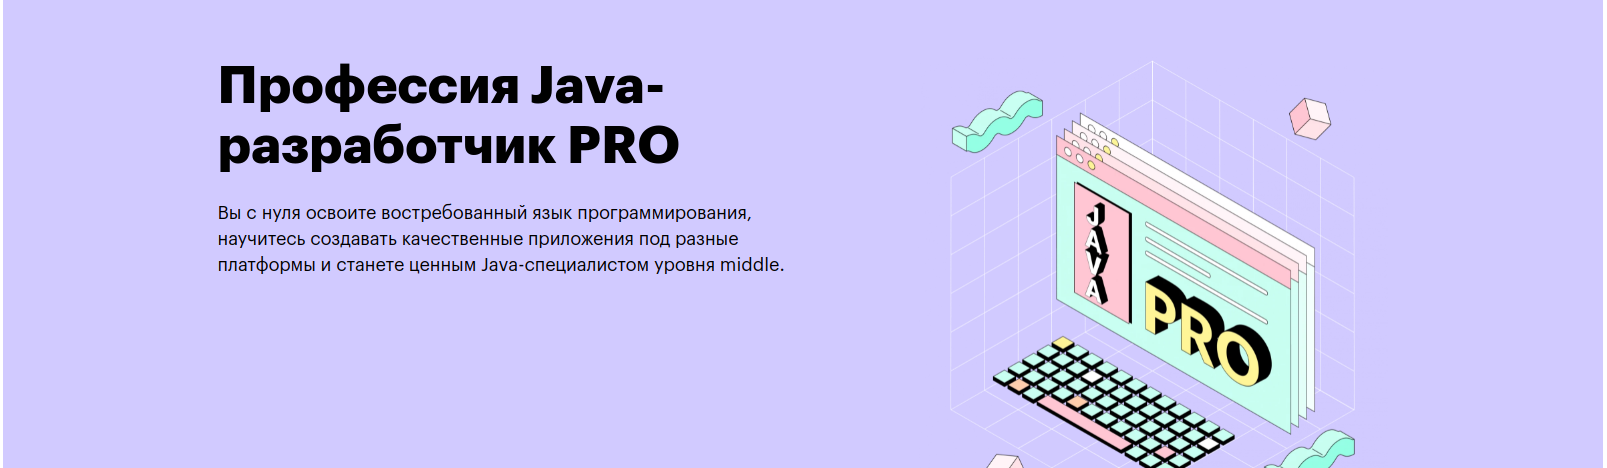 Профессия Java-разработчик PRO от Skillbox